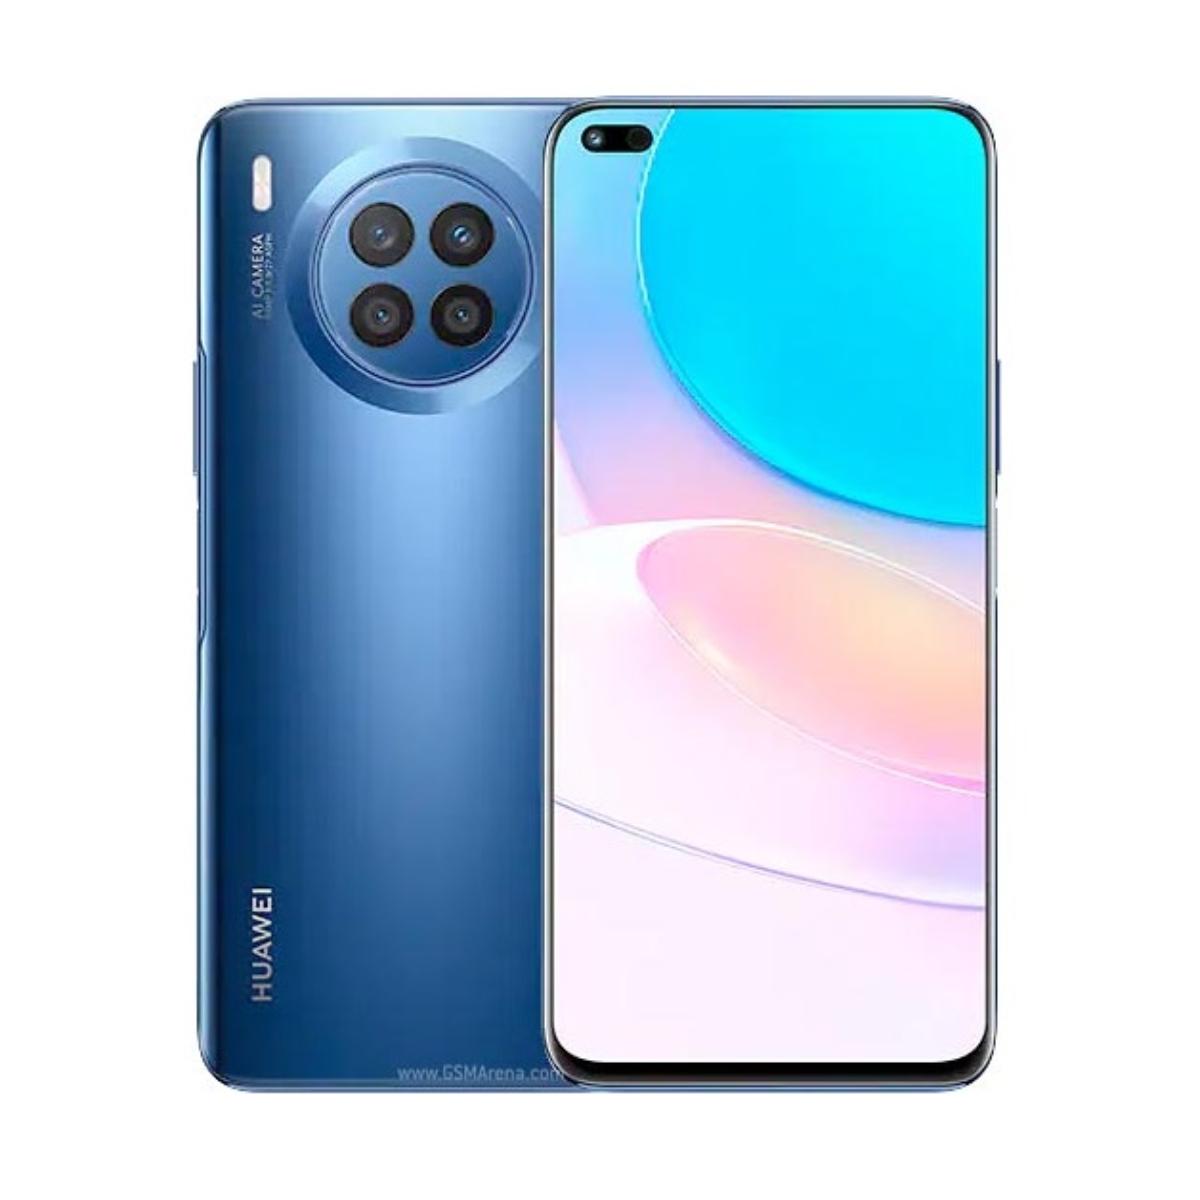 NEN-L22/Huawei Mobile Nova 8i Interstellar Blue/ROM 128GB/RAM 8GB 6.76 inches / 4G / Blue